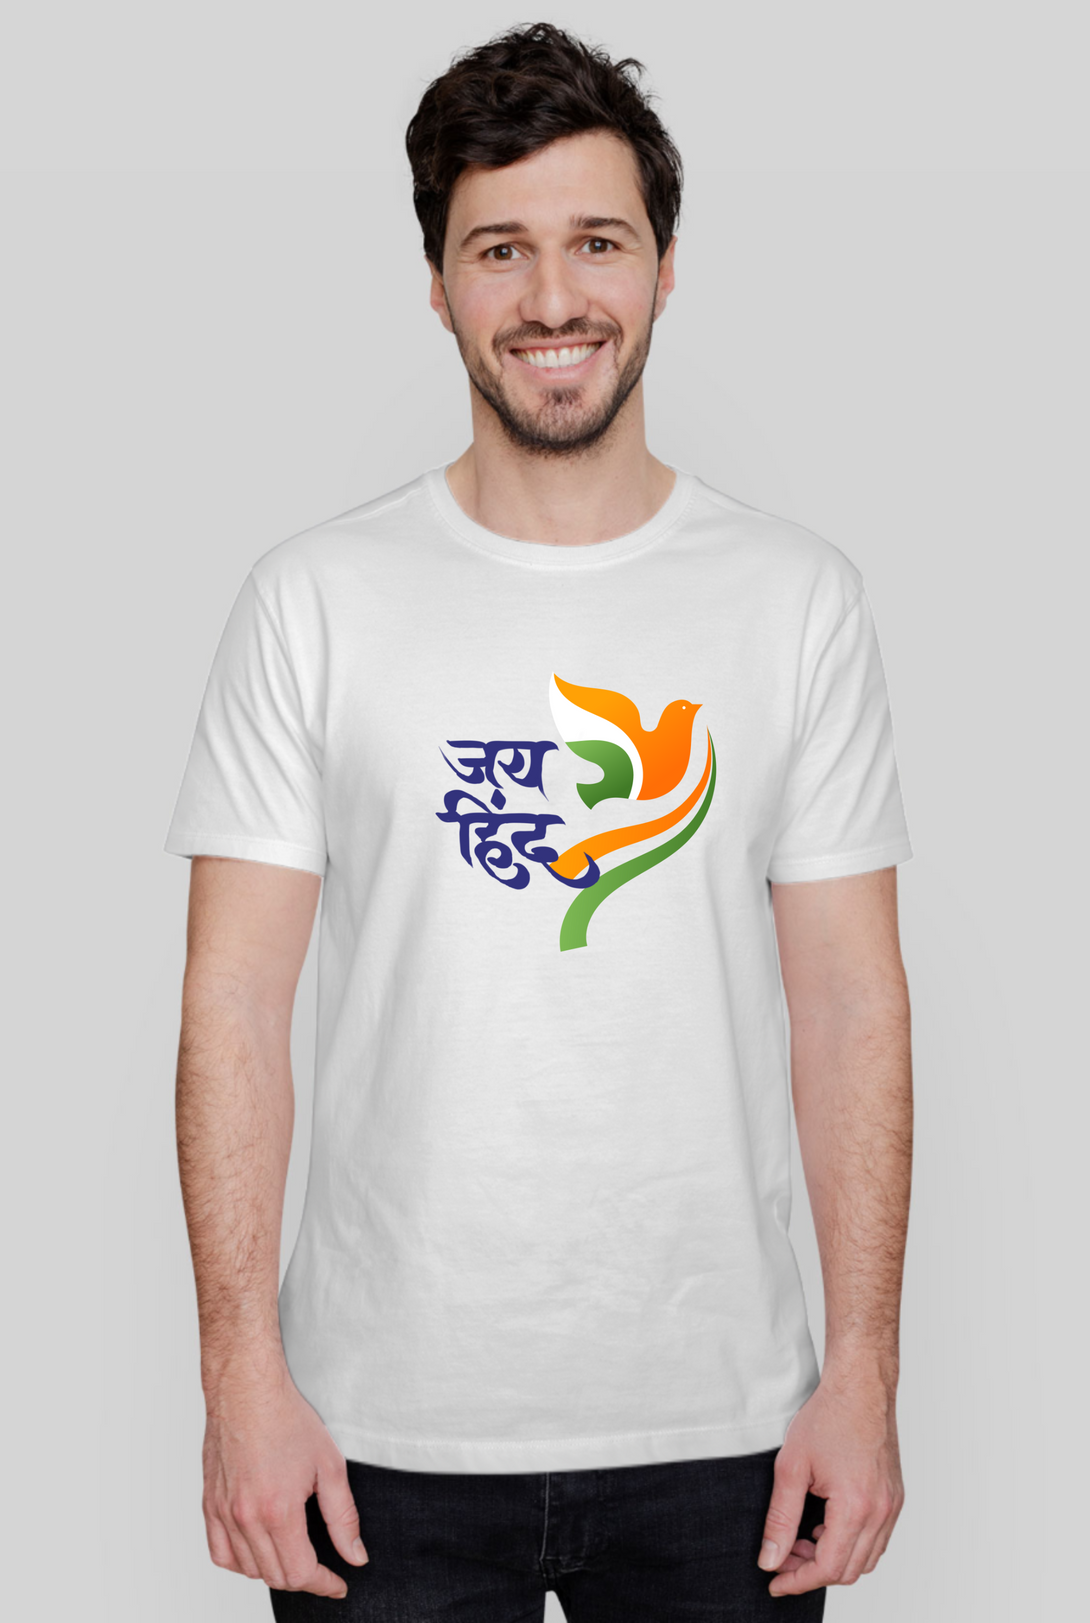 Jai Hind White Printed T-Shirt For Men - WowWaves - 6